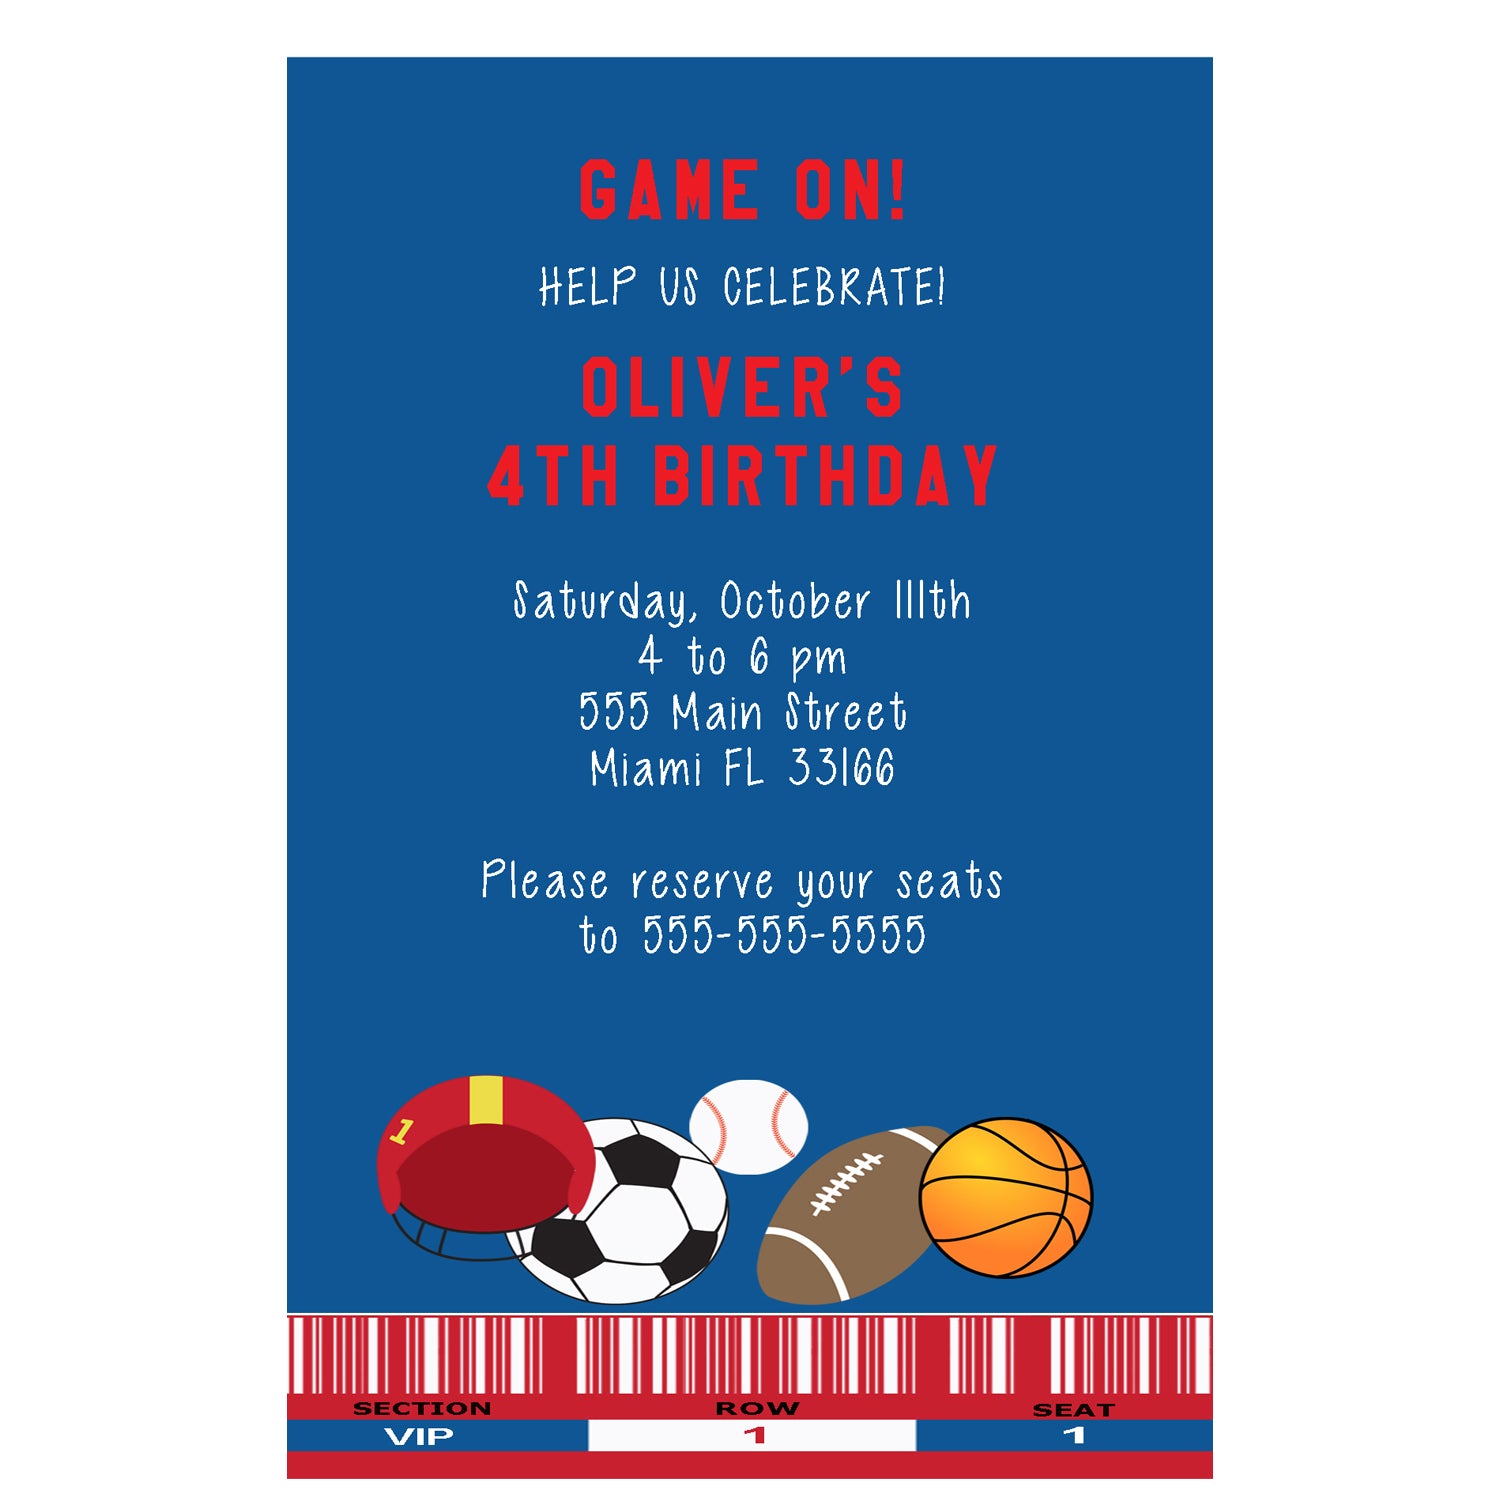 30 All sports blue invitations personalized baby boy shower birthday